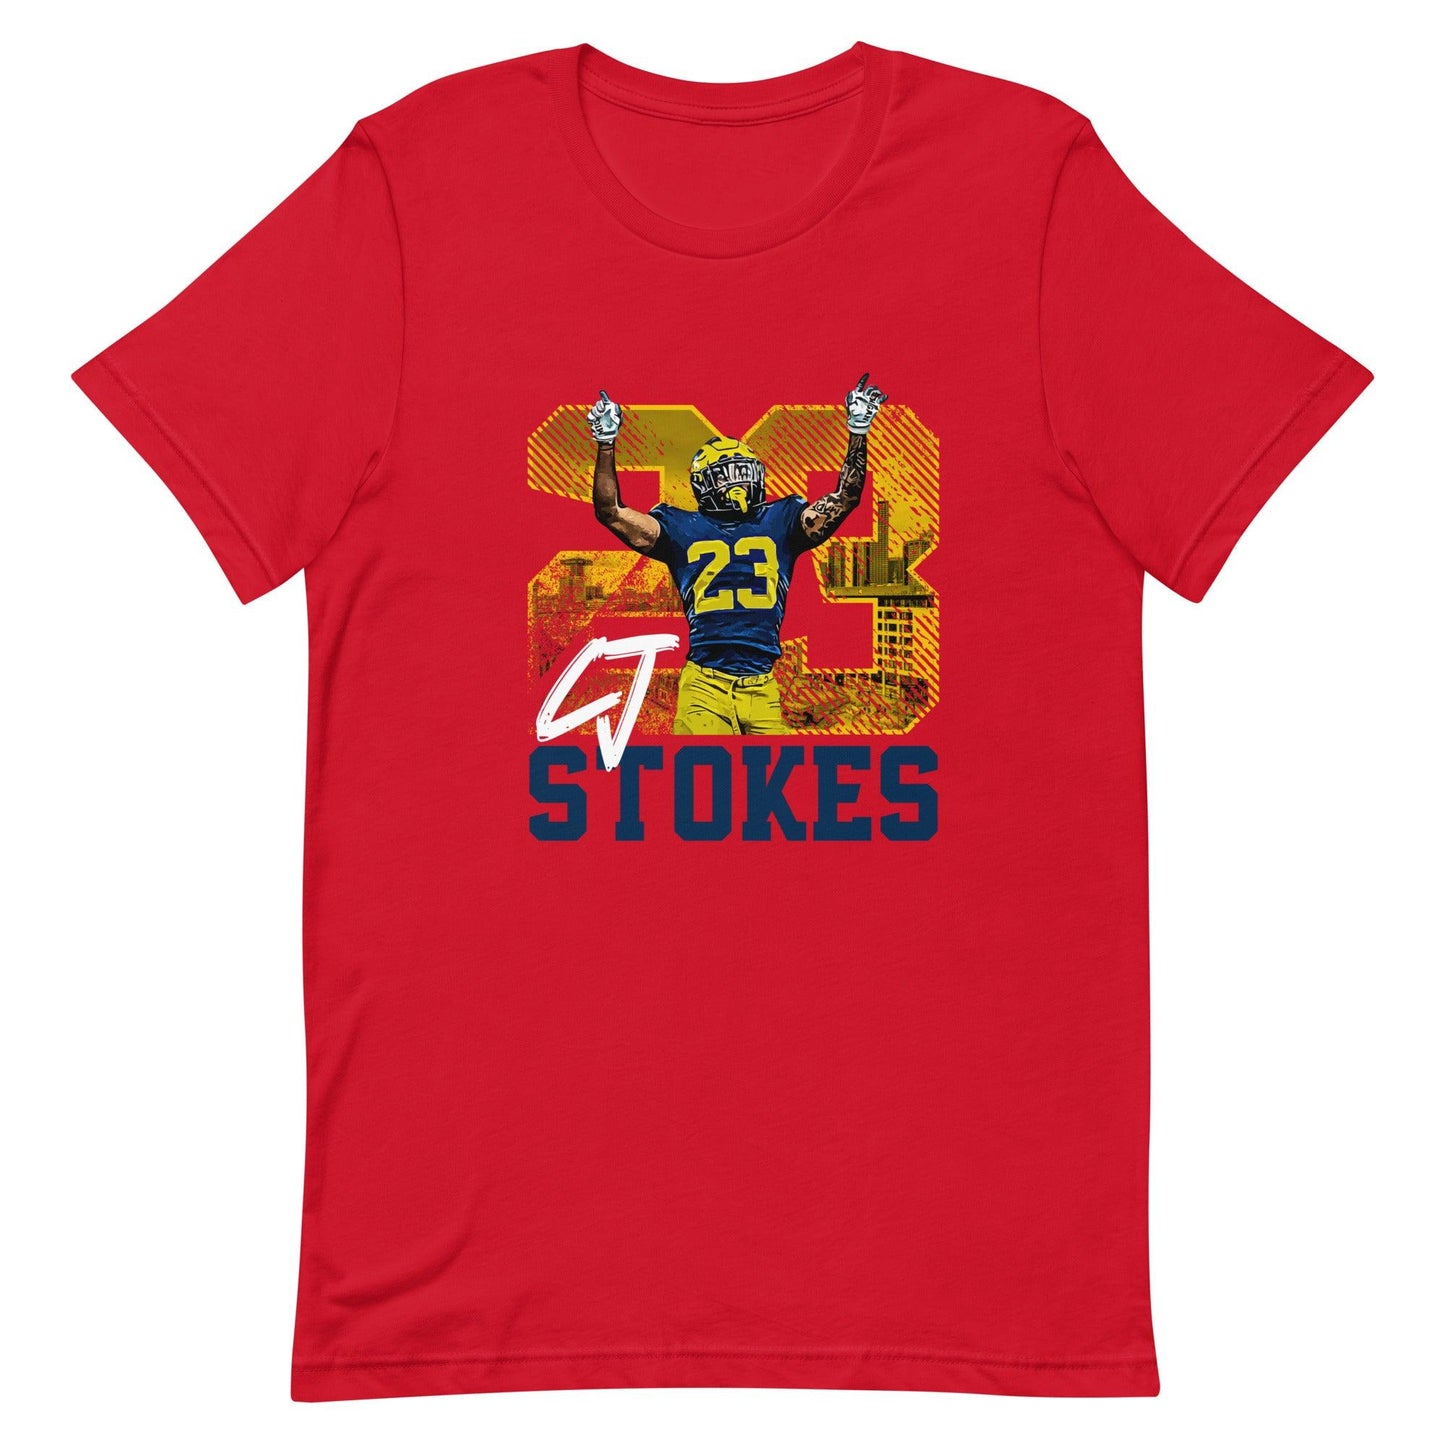 CJ Stokes "Gameday" t-shirt - Fan Arch